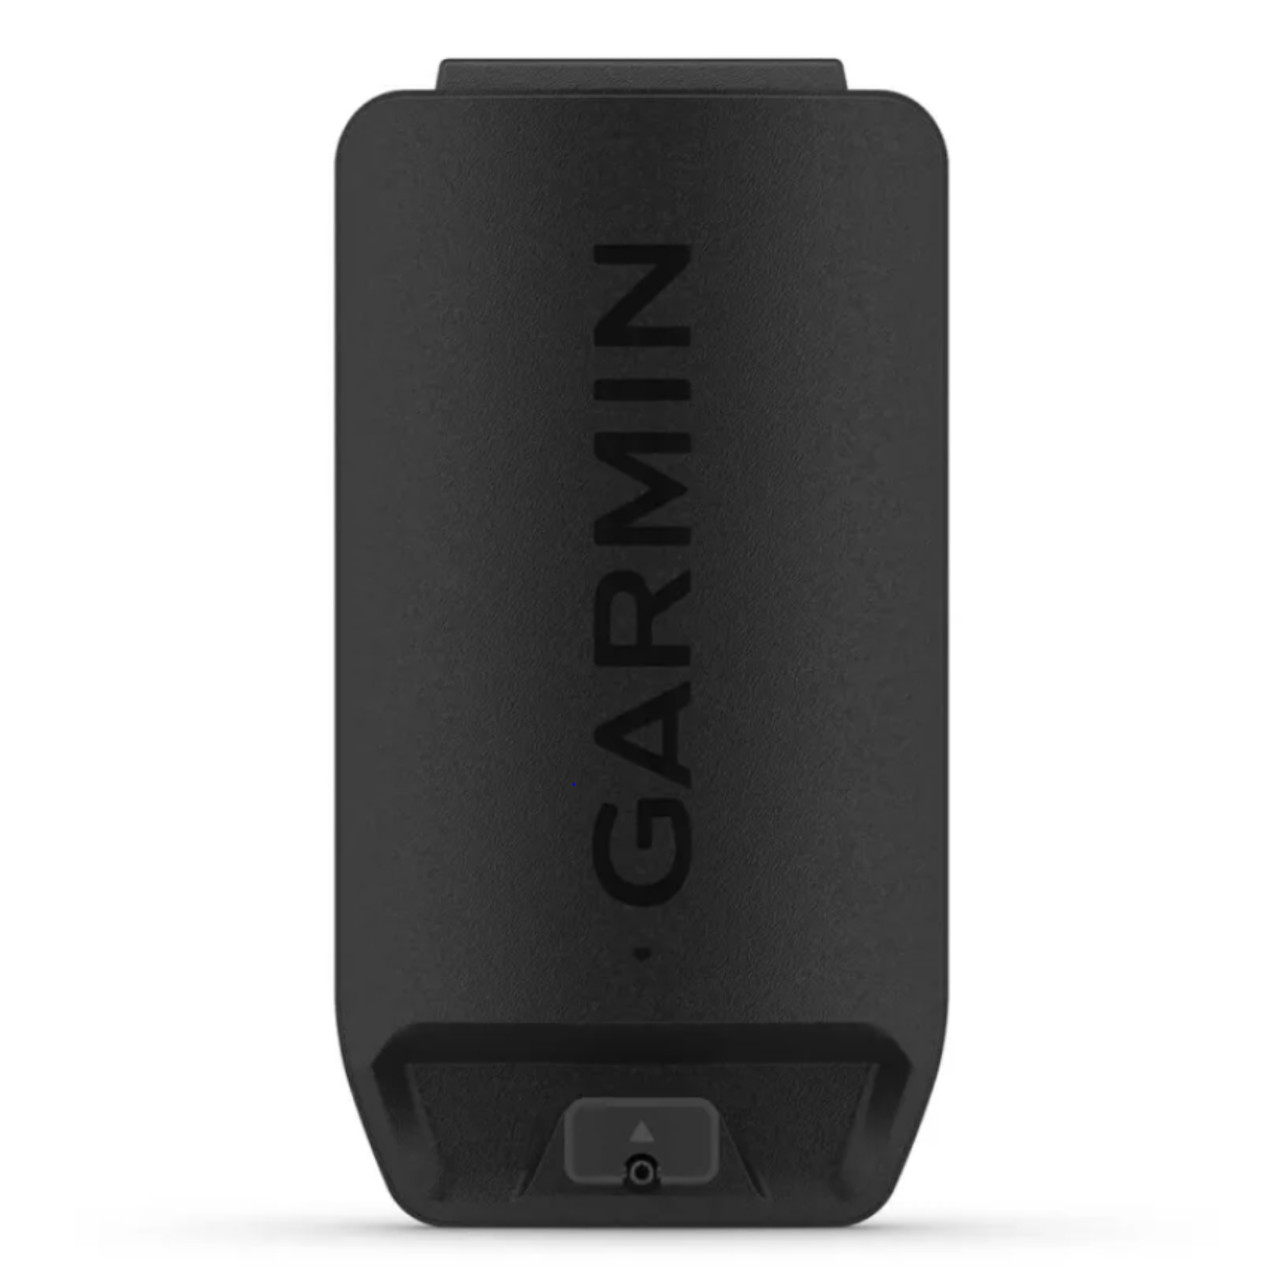 Garmin New OEM Lithium-ion Battery Pack, 010-12881-05